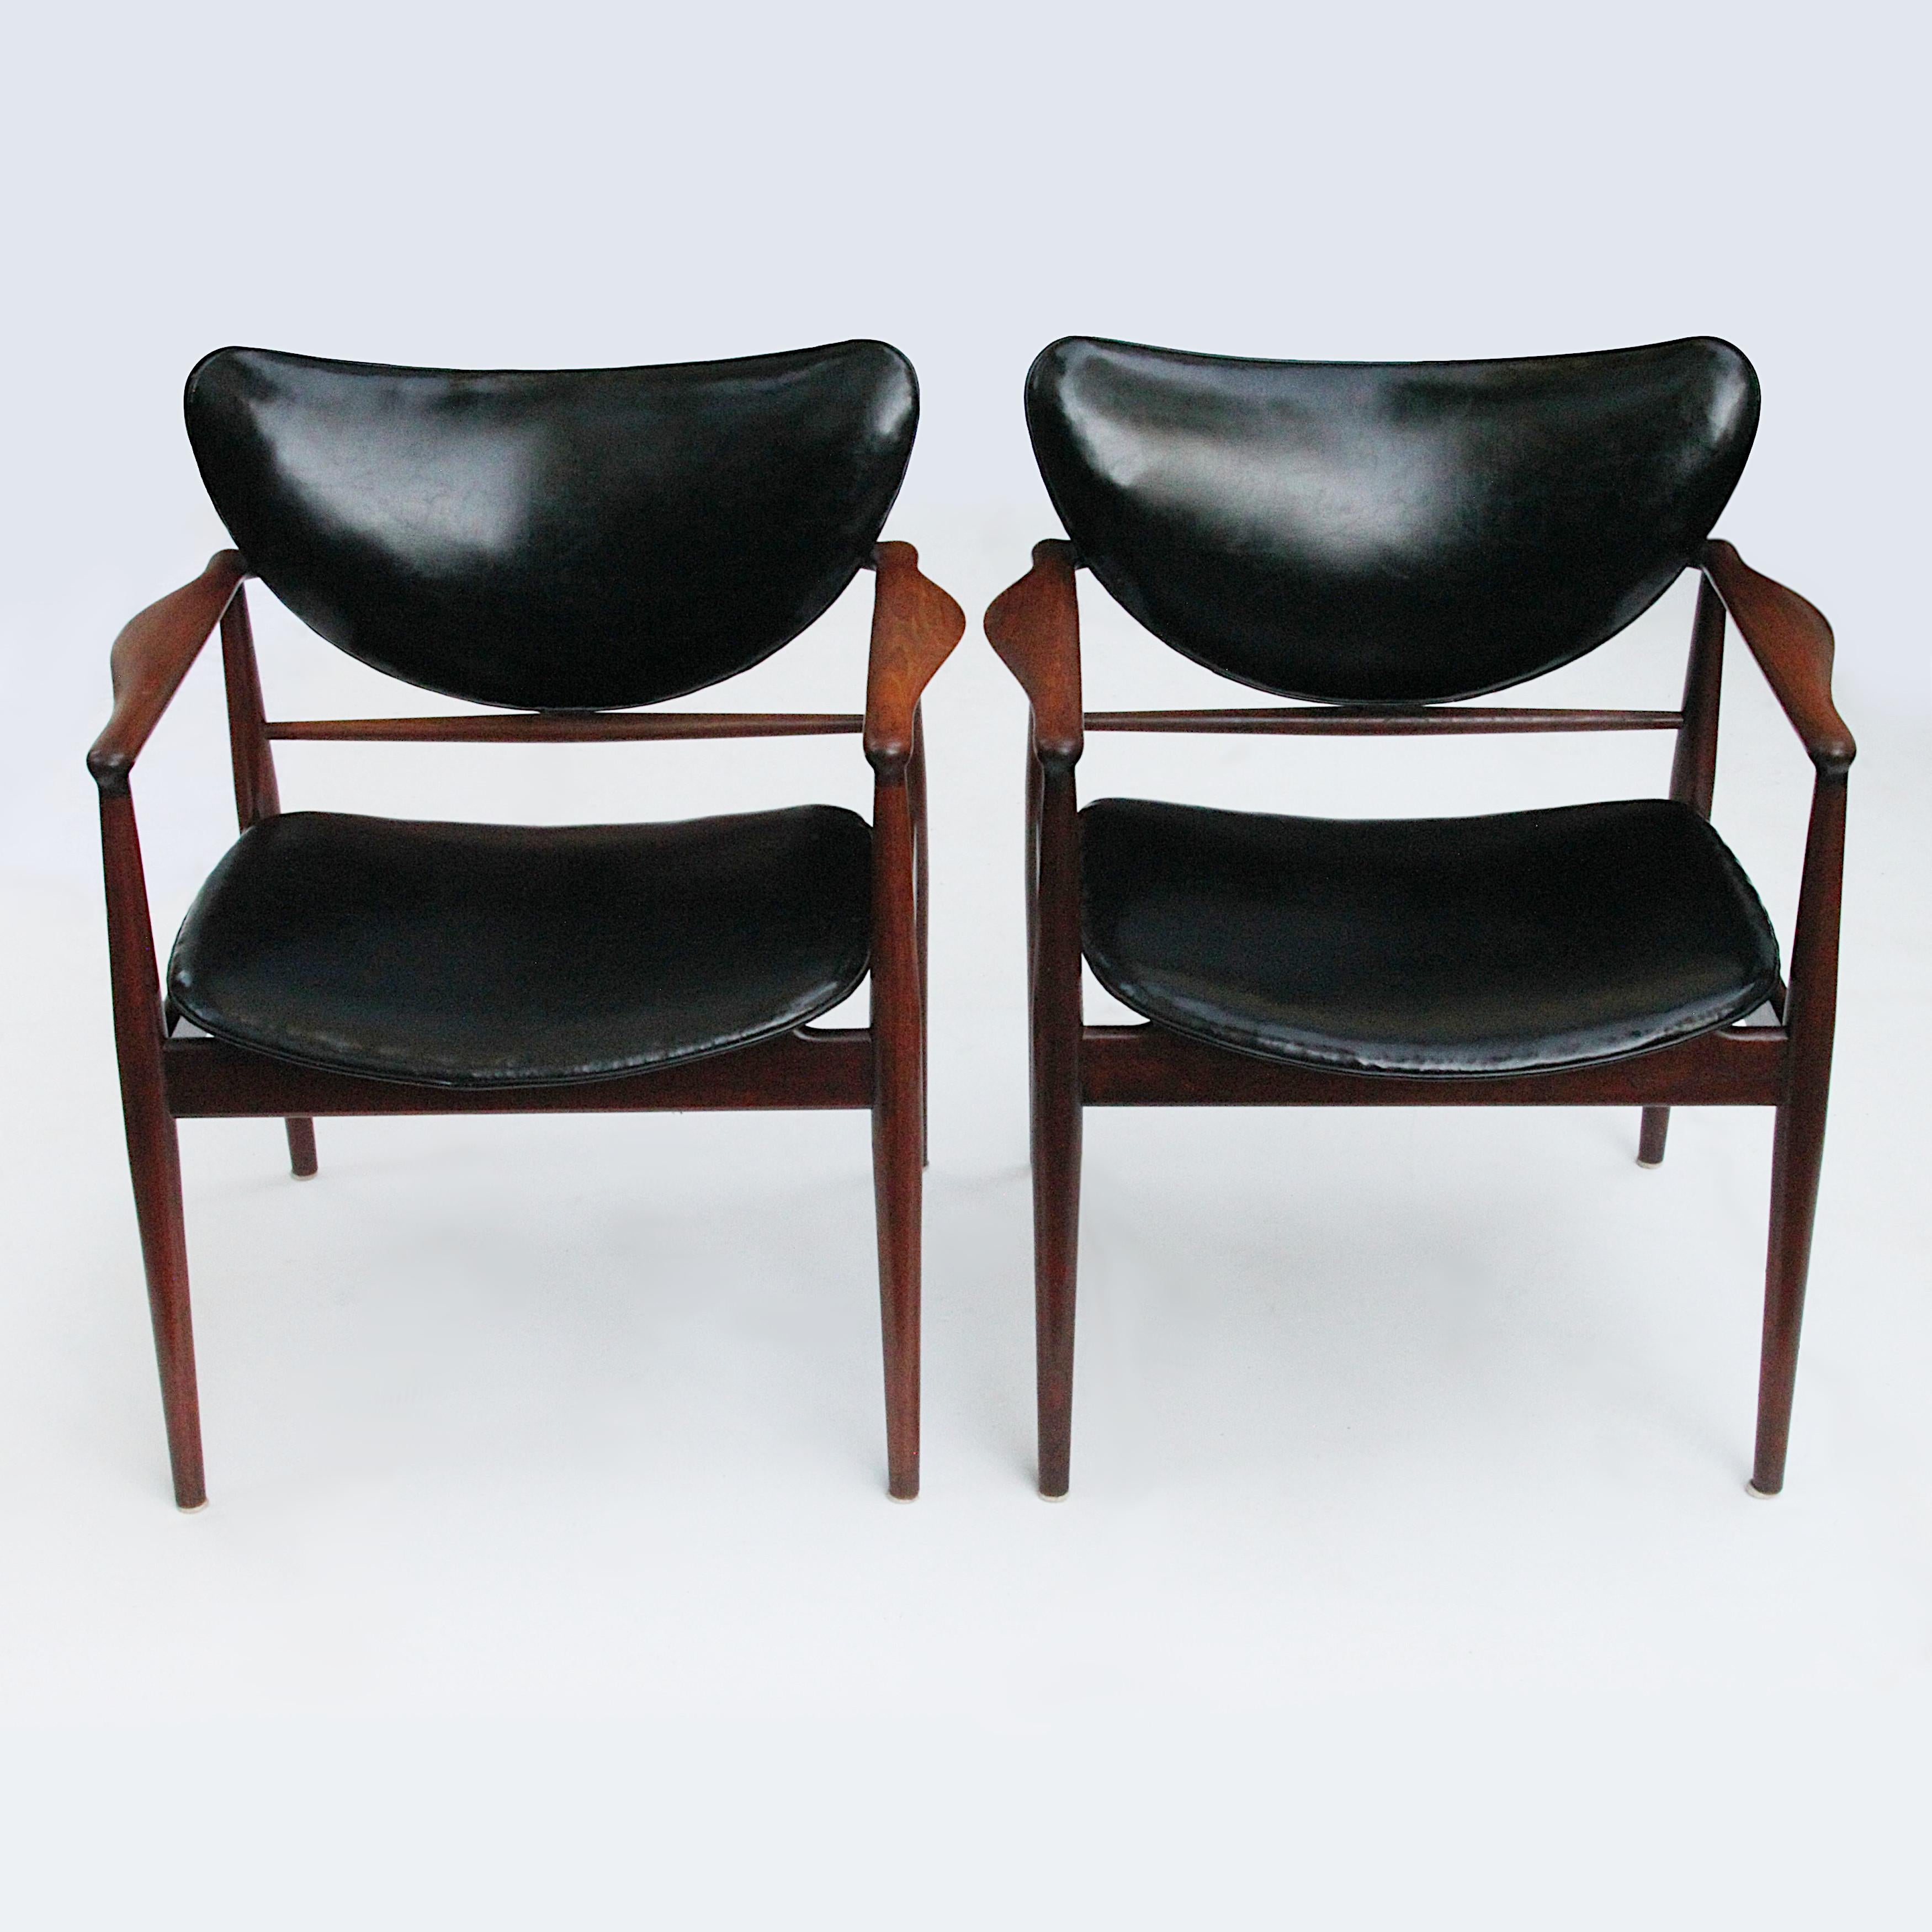 American Matching Pair of Original Finn Juhl Model 48/400 1/2 Walnut Side Chairs by Baker